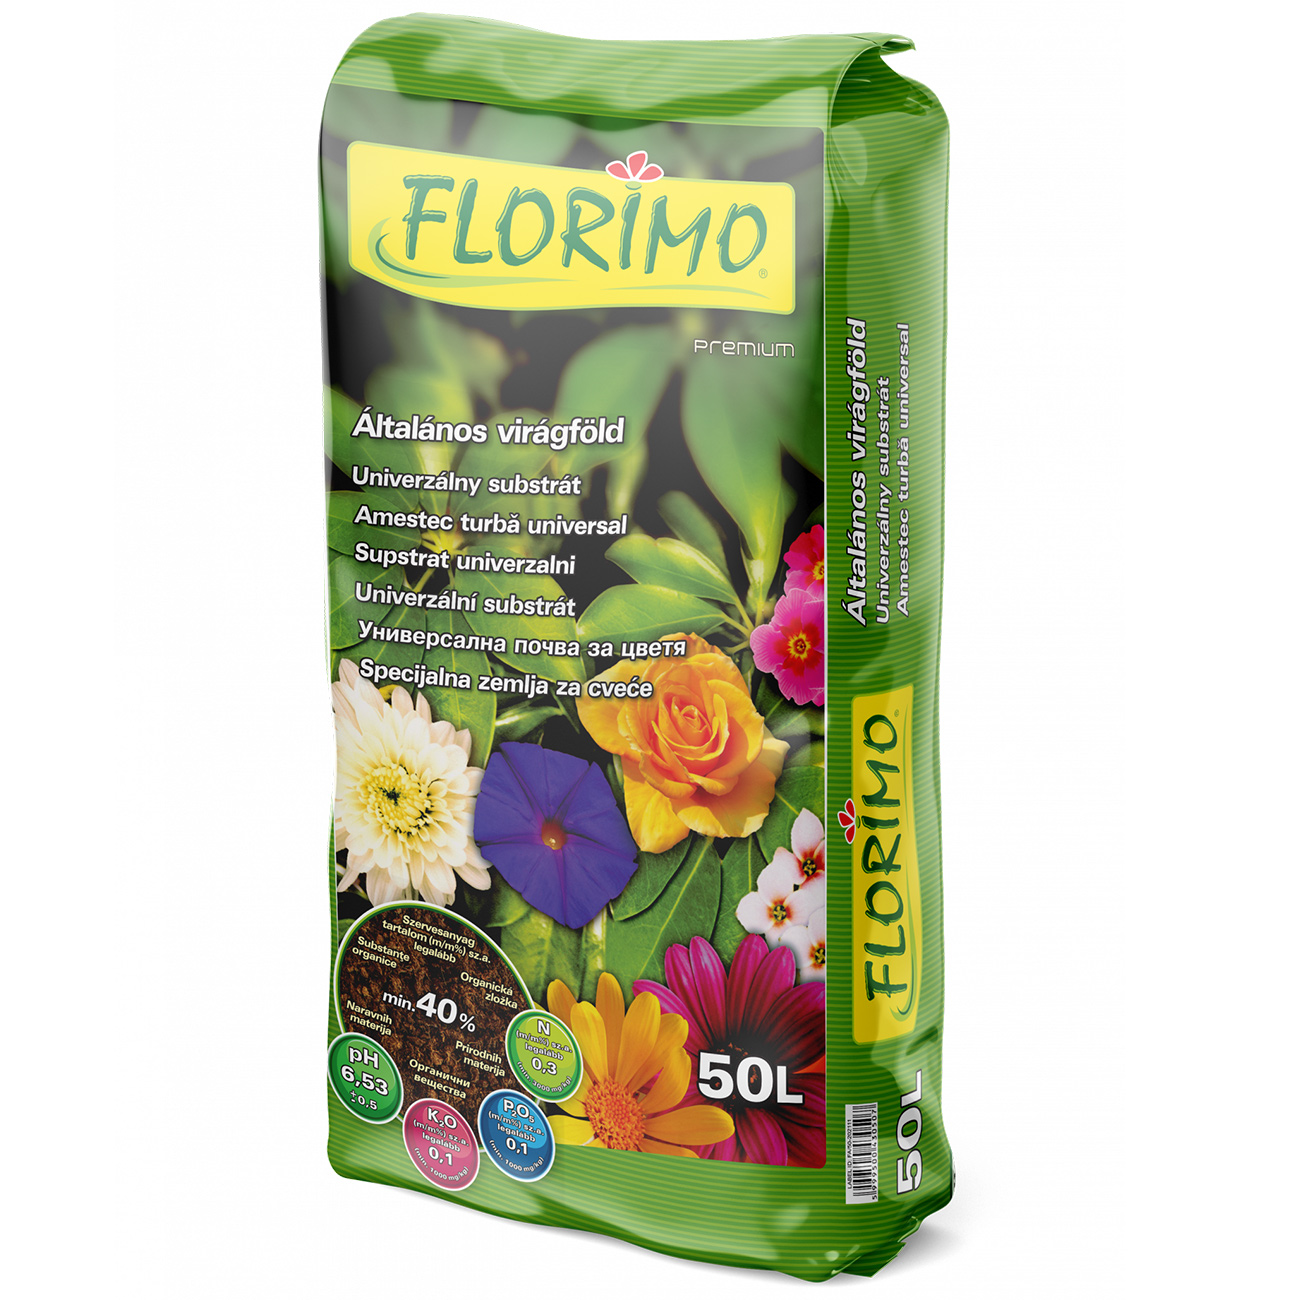 Florimo® általános virágföld 50L